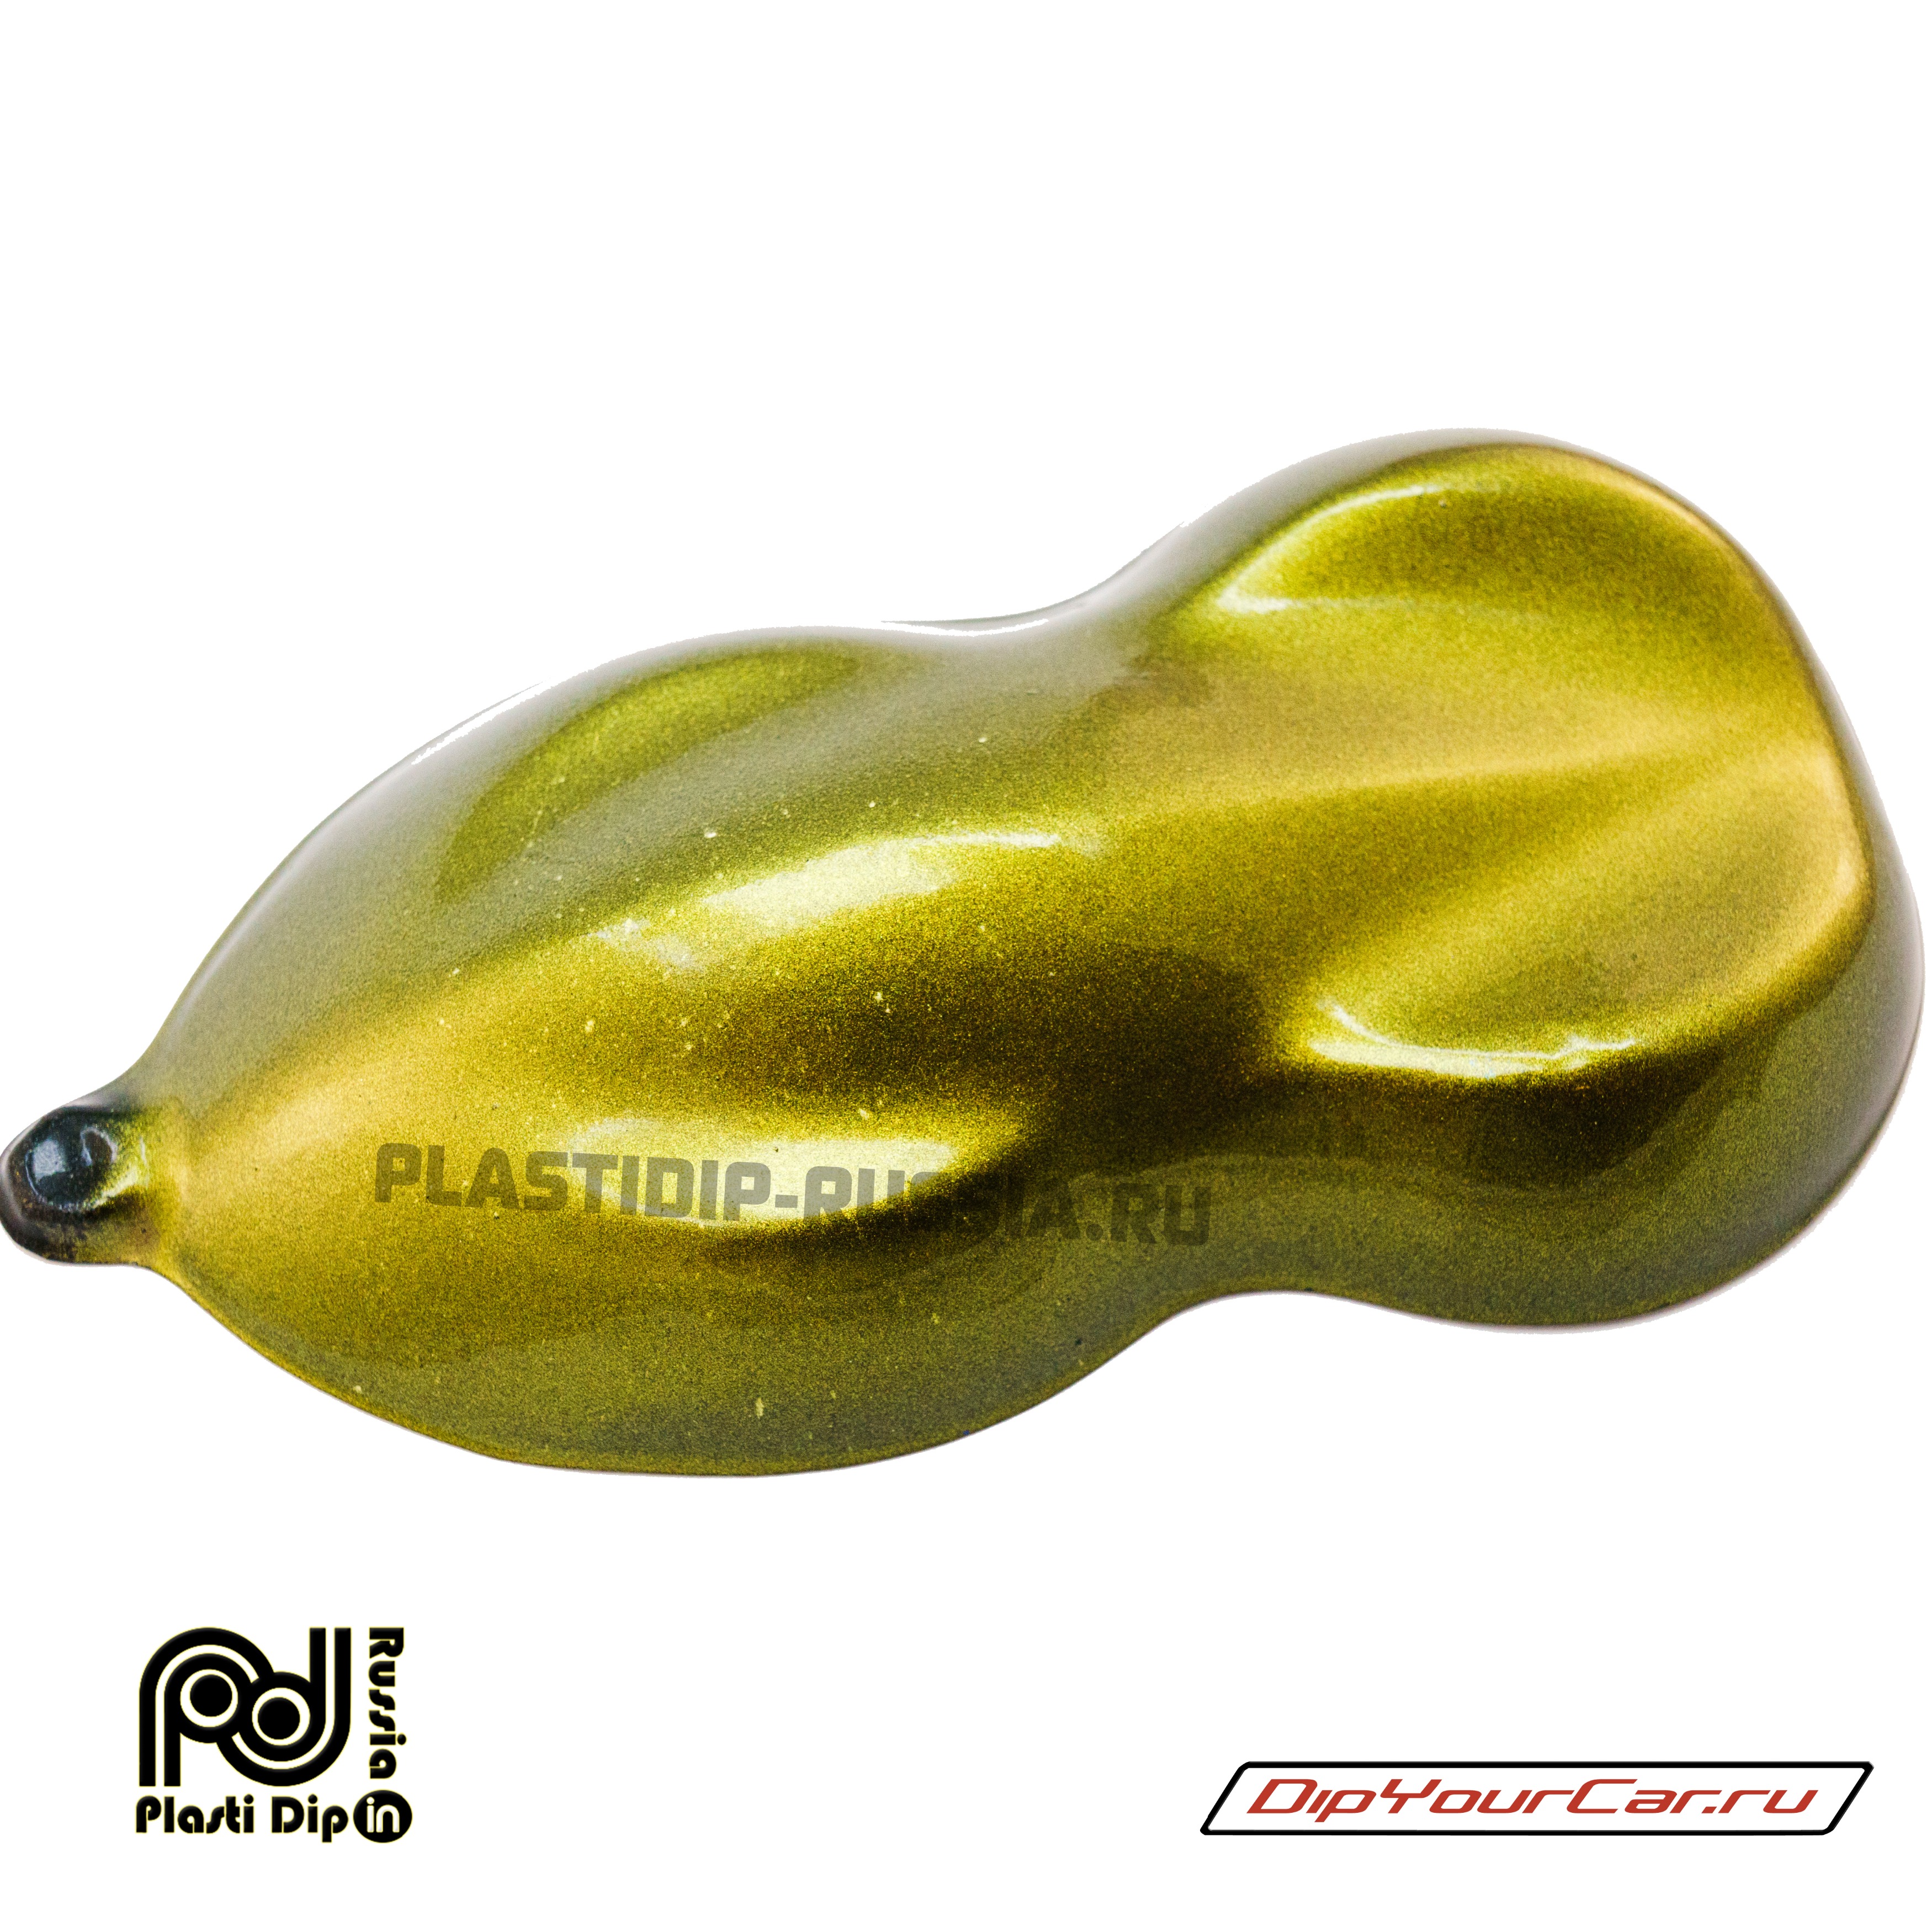 Золотой хамелеон Gold Colorshift для пластидипа